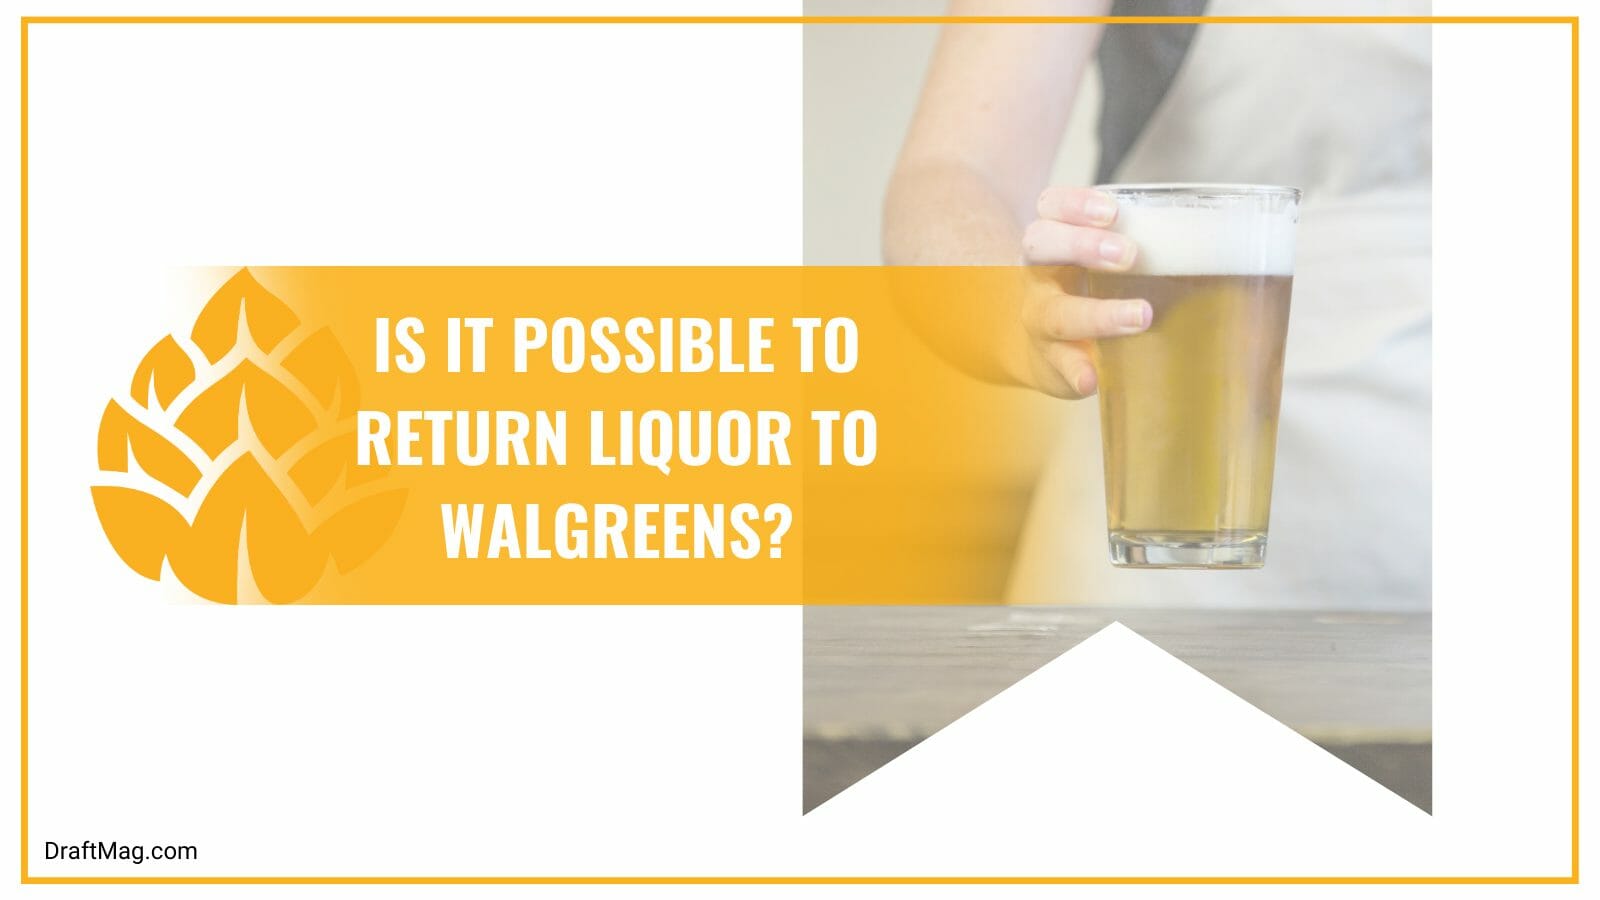 Return liquor to walgreens